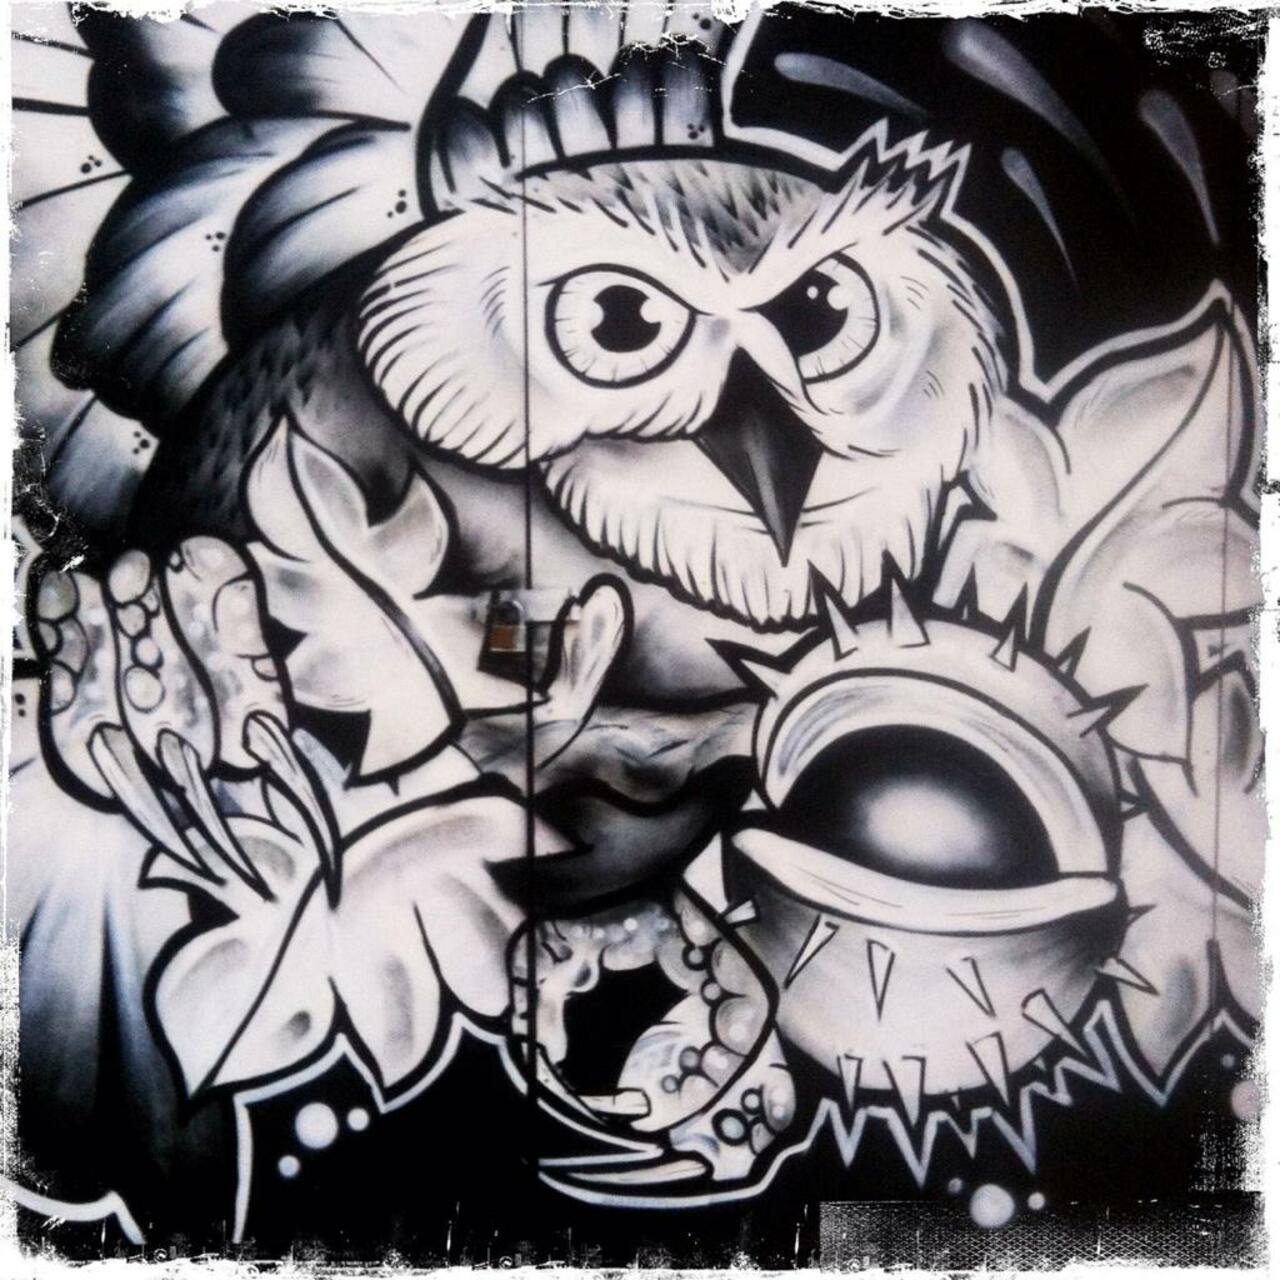 Conkers anyone??? #ThisOneArt work on Fashion Street #art #graffiti #streetart http://t.co/pUTLlaEnYv